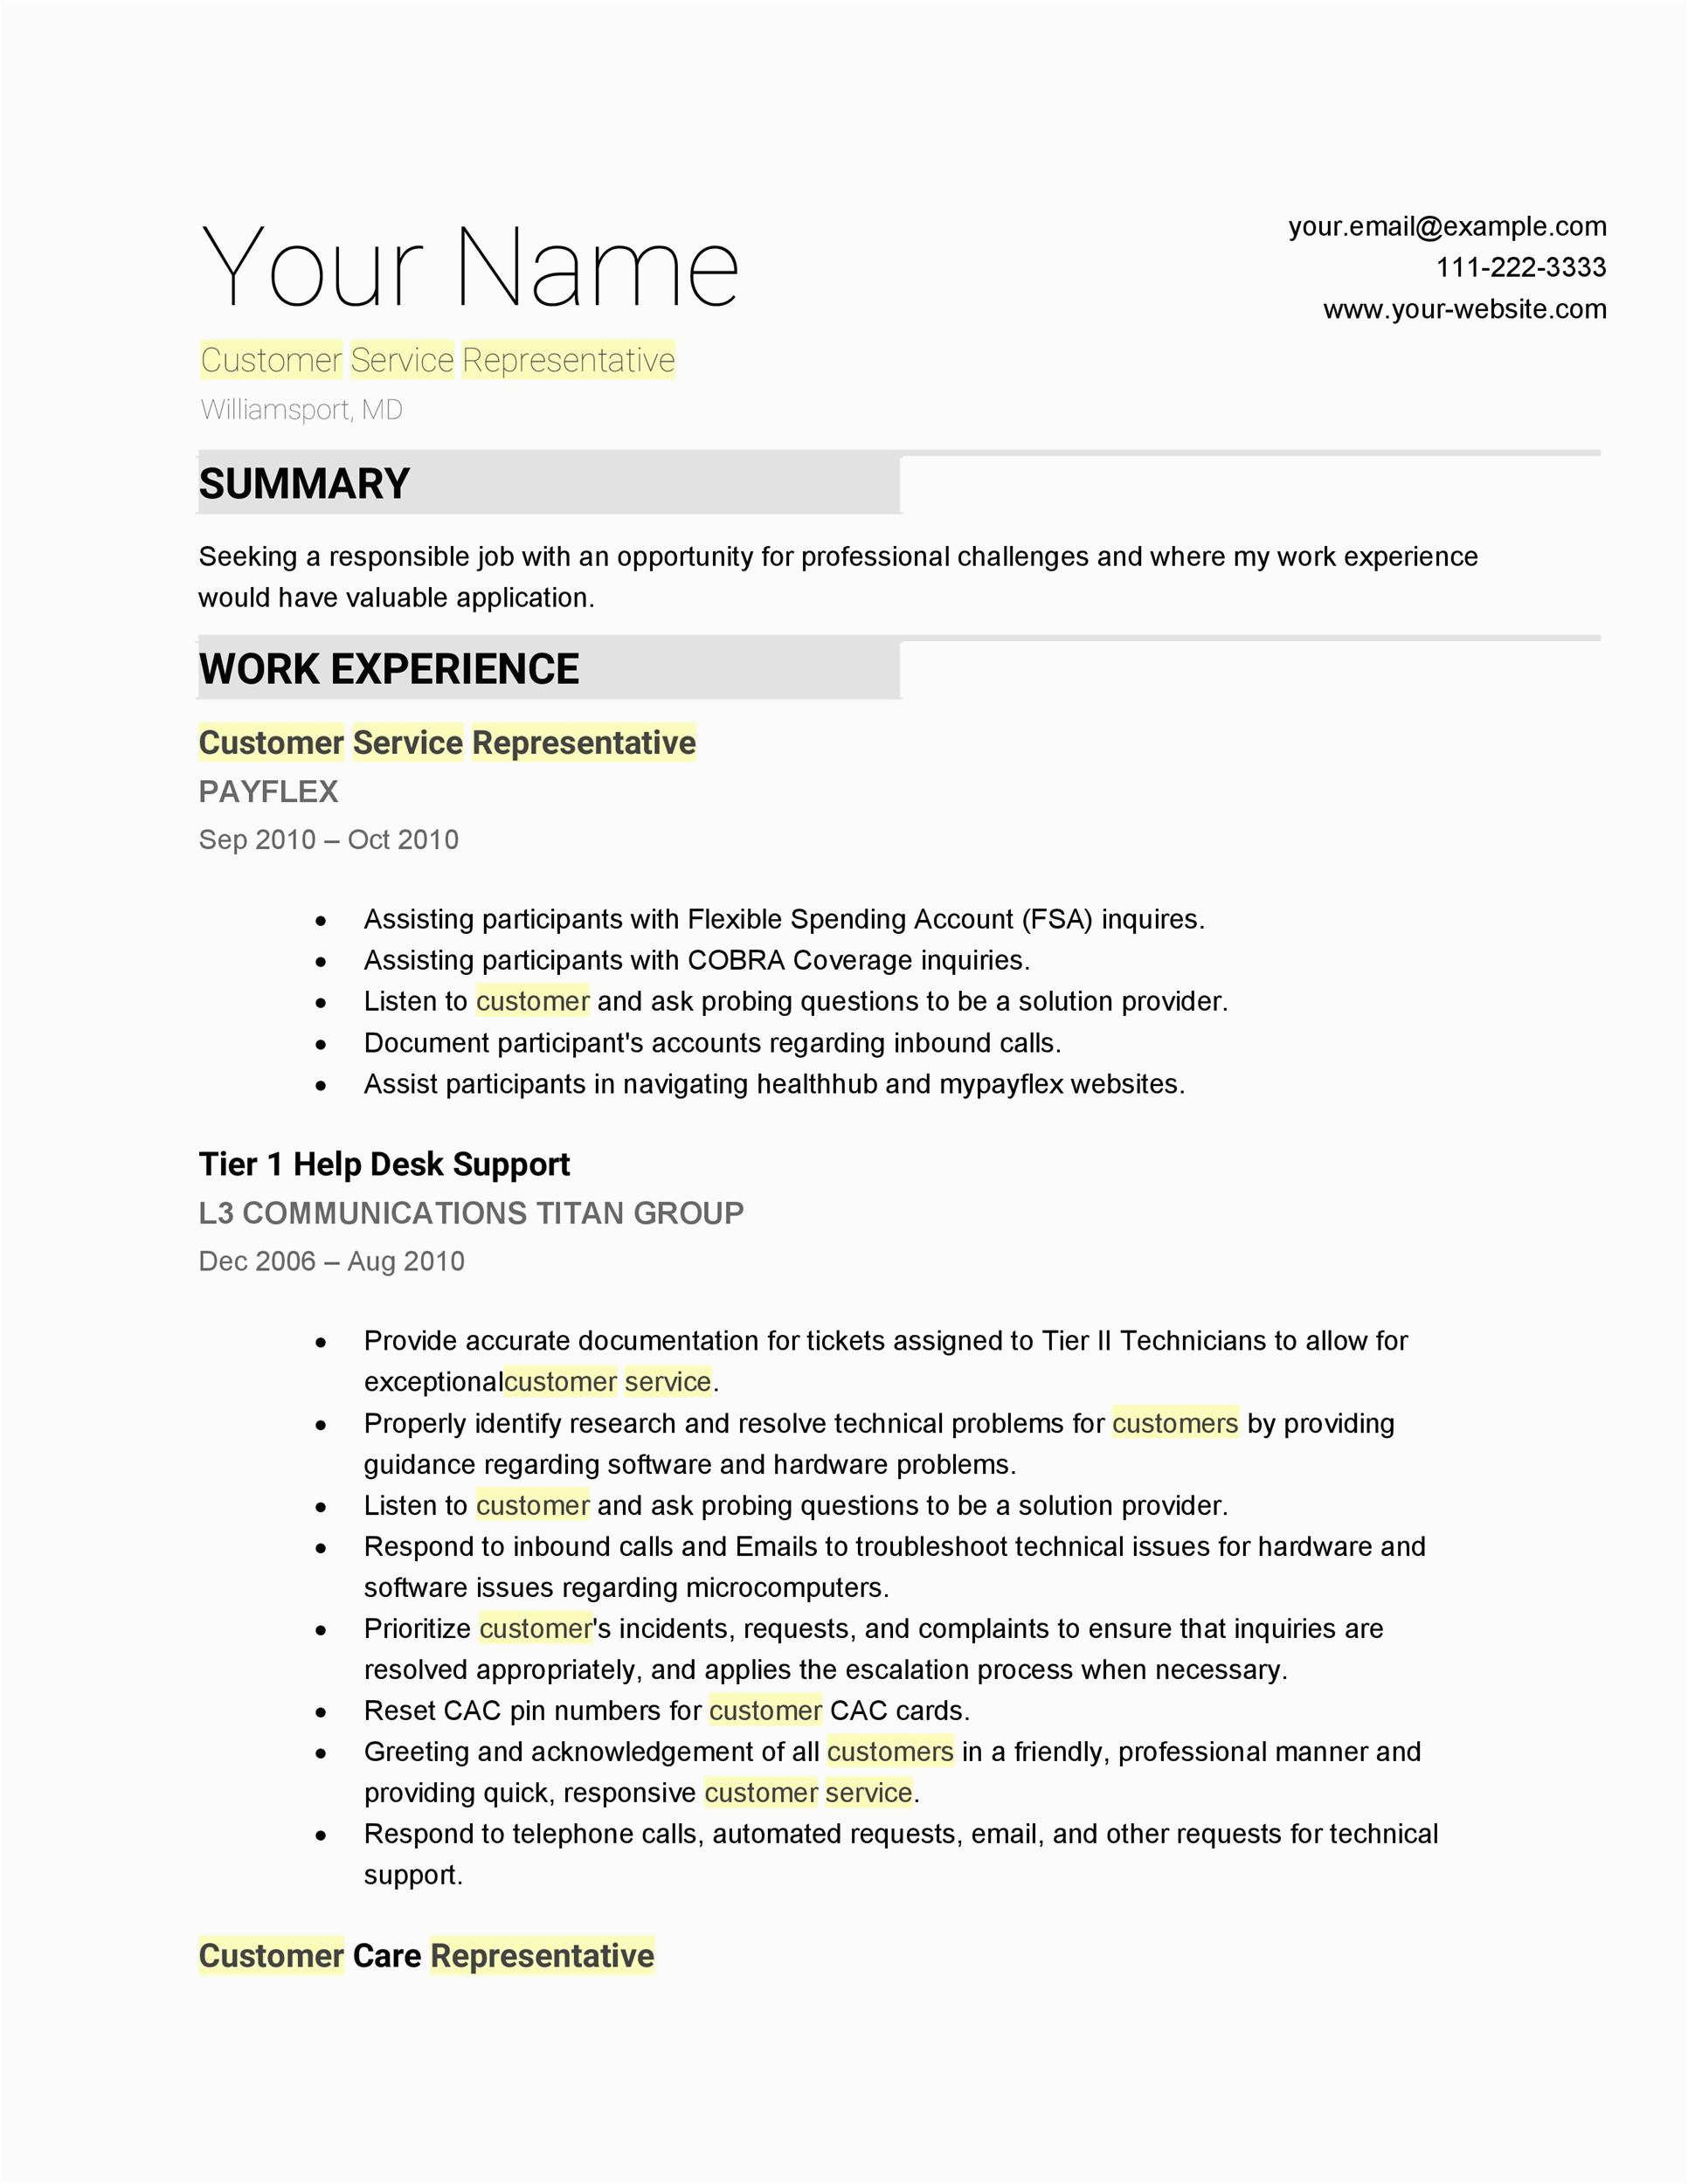 Sample Resume for Customer Service Position 30 Customer Service Resume Examples Templatelab